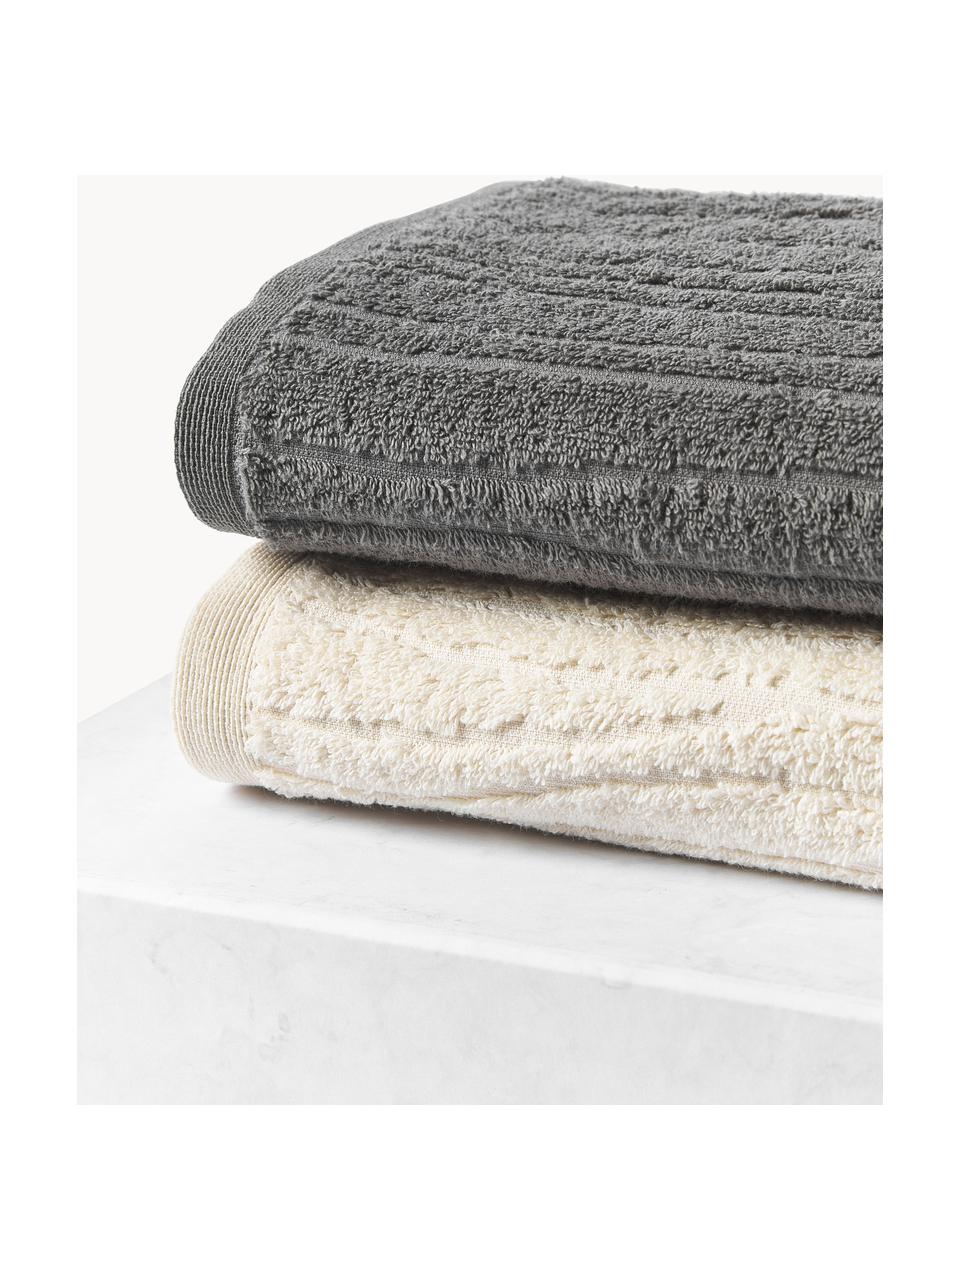 Set de toallas Audrina, tamaños diferentes, Beige claro, Set de 3 (toalla tocador, toalla lavabo y toalla ducha)